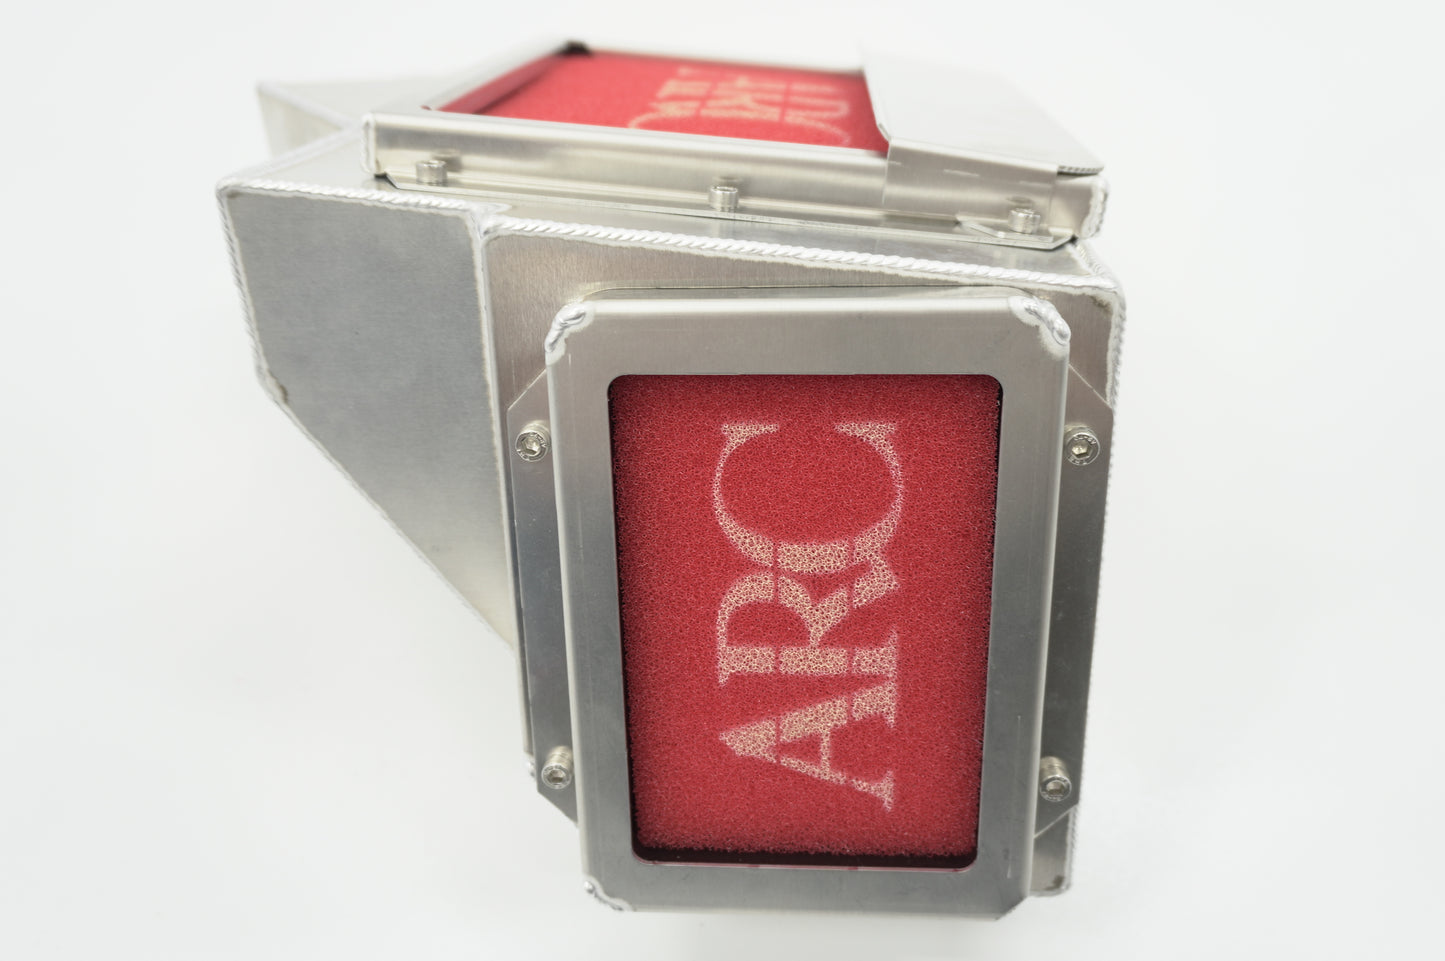 ARC Brazing Super Induction Box - BNR32 #140121021